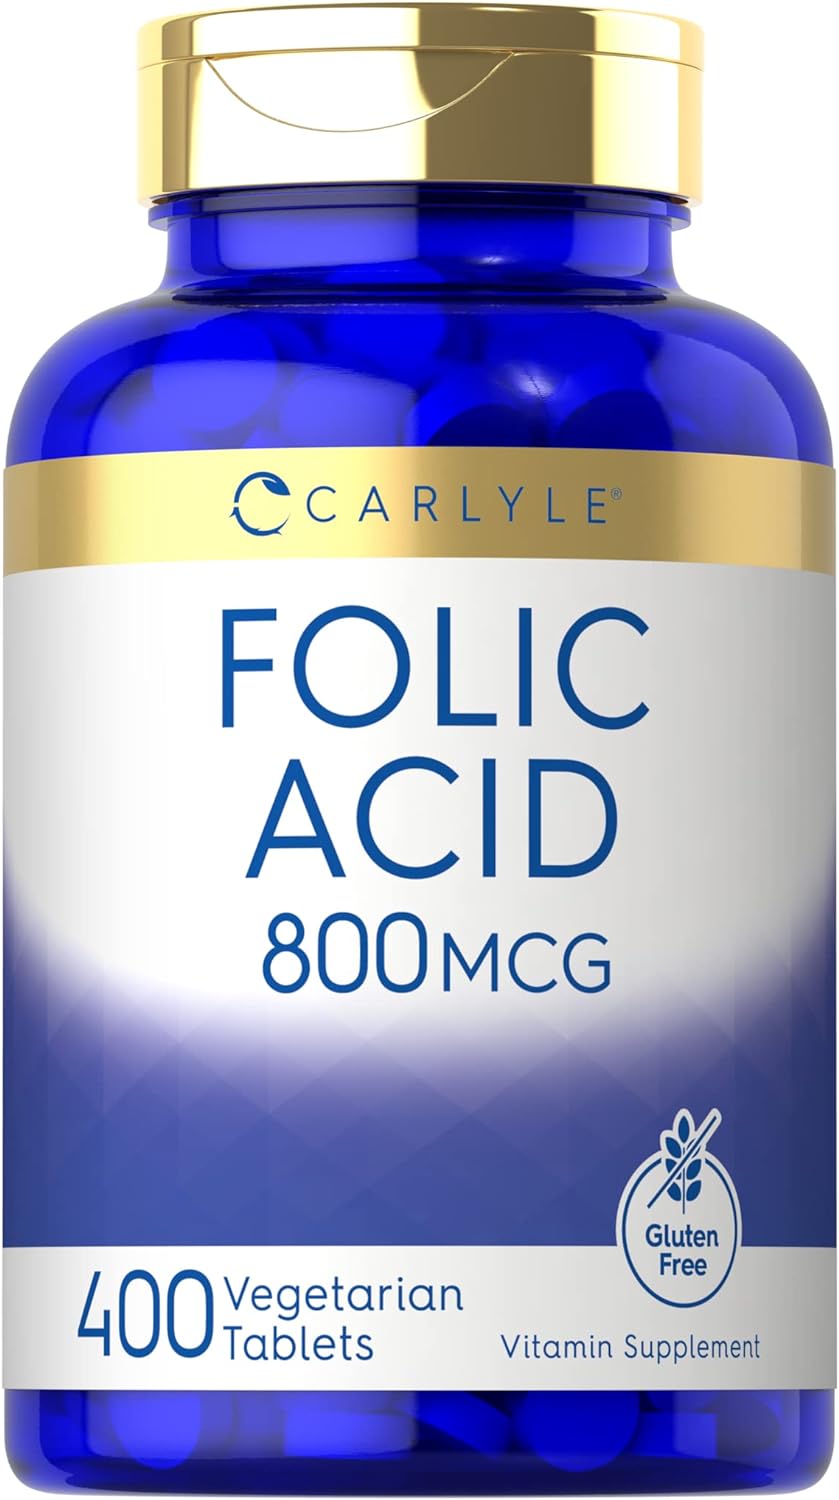 Carlyle Folic Acid 800 Mcg Tablets | 400 Count | Vegetarian, Non-GMO, Gluten Free